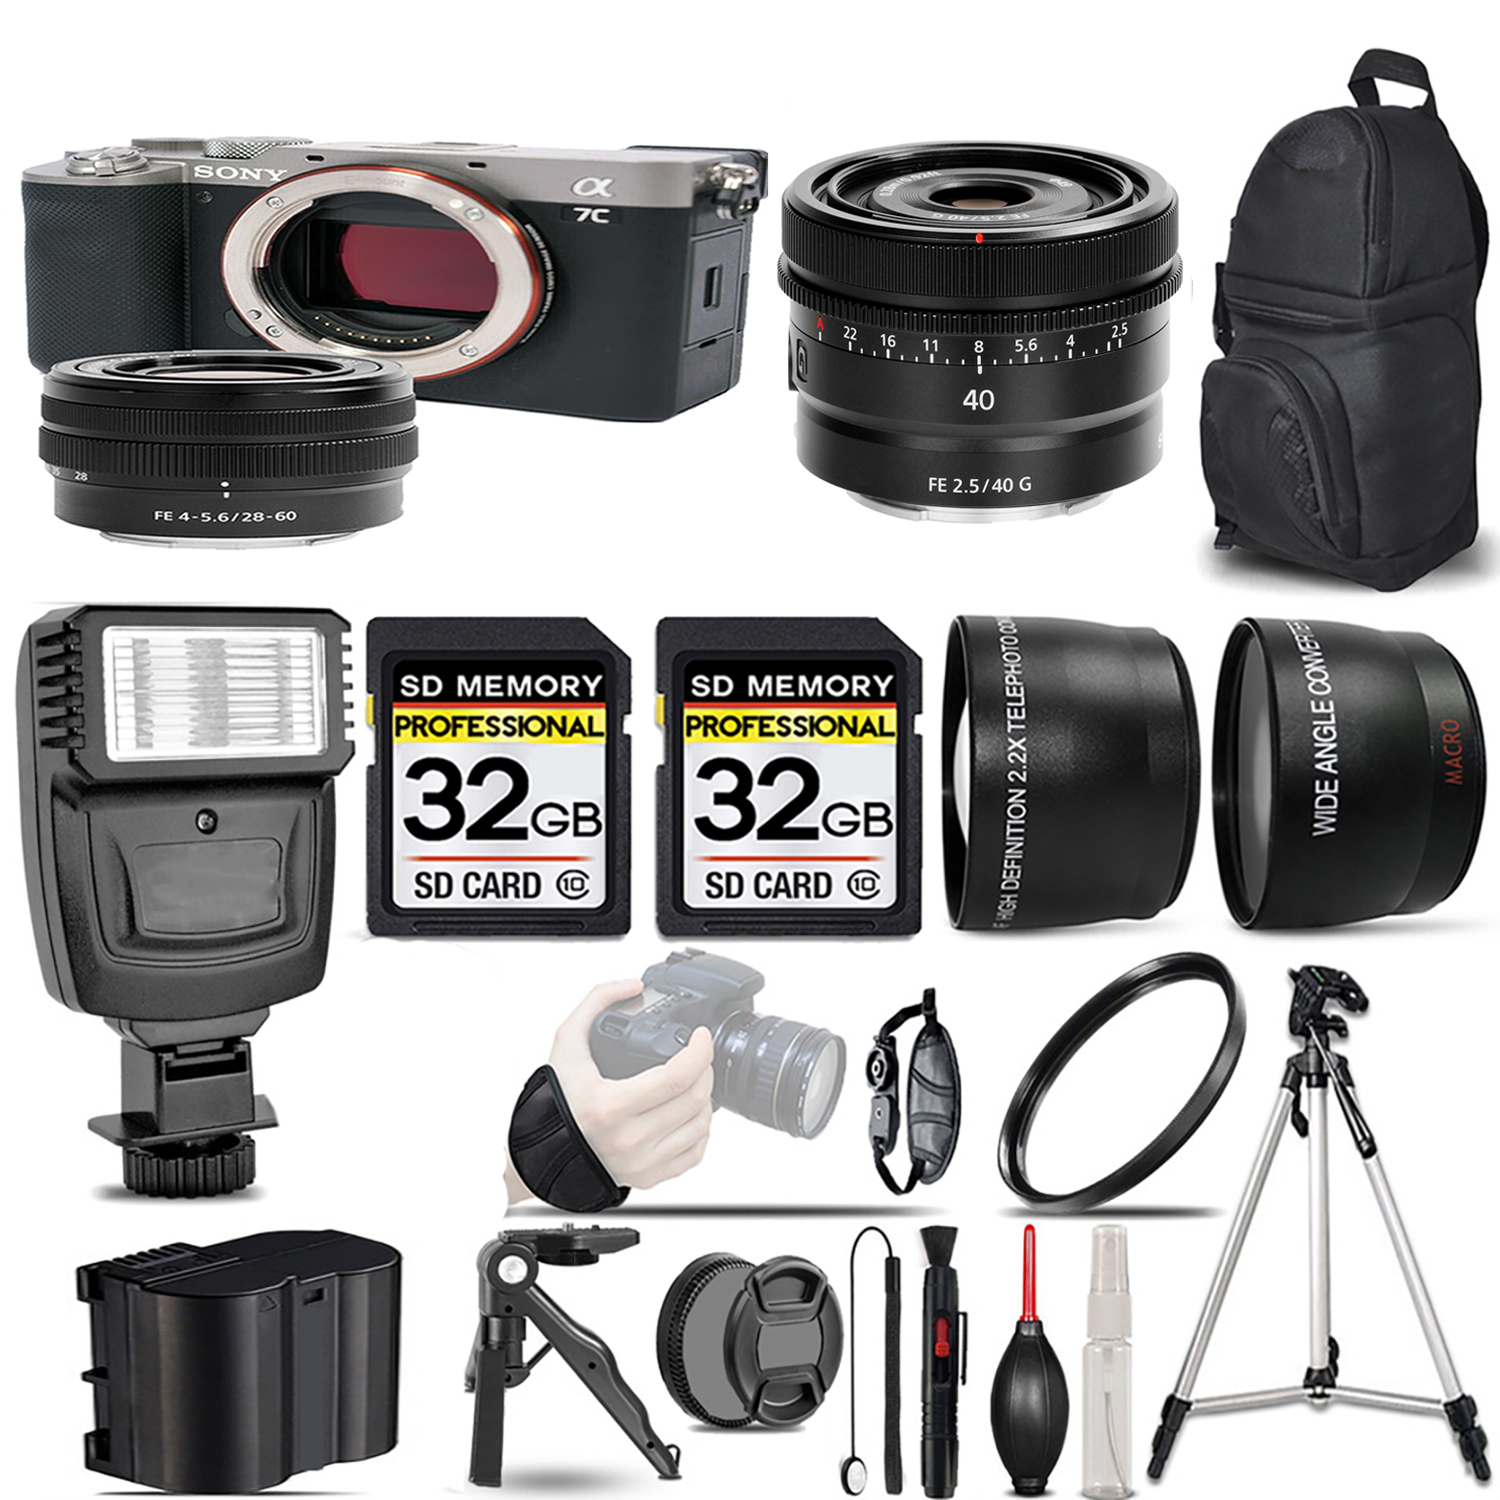 Alpha a7C Camera (Silver) + 28-60mm Lens + 40mm f/2.5 G Lens + Flash + 64GB *FREE SHIPPING*